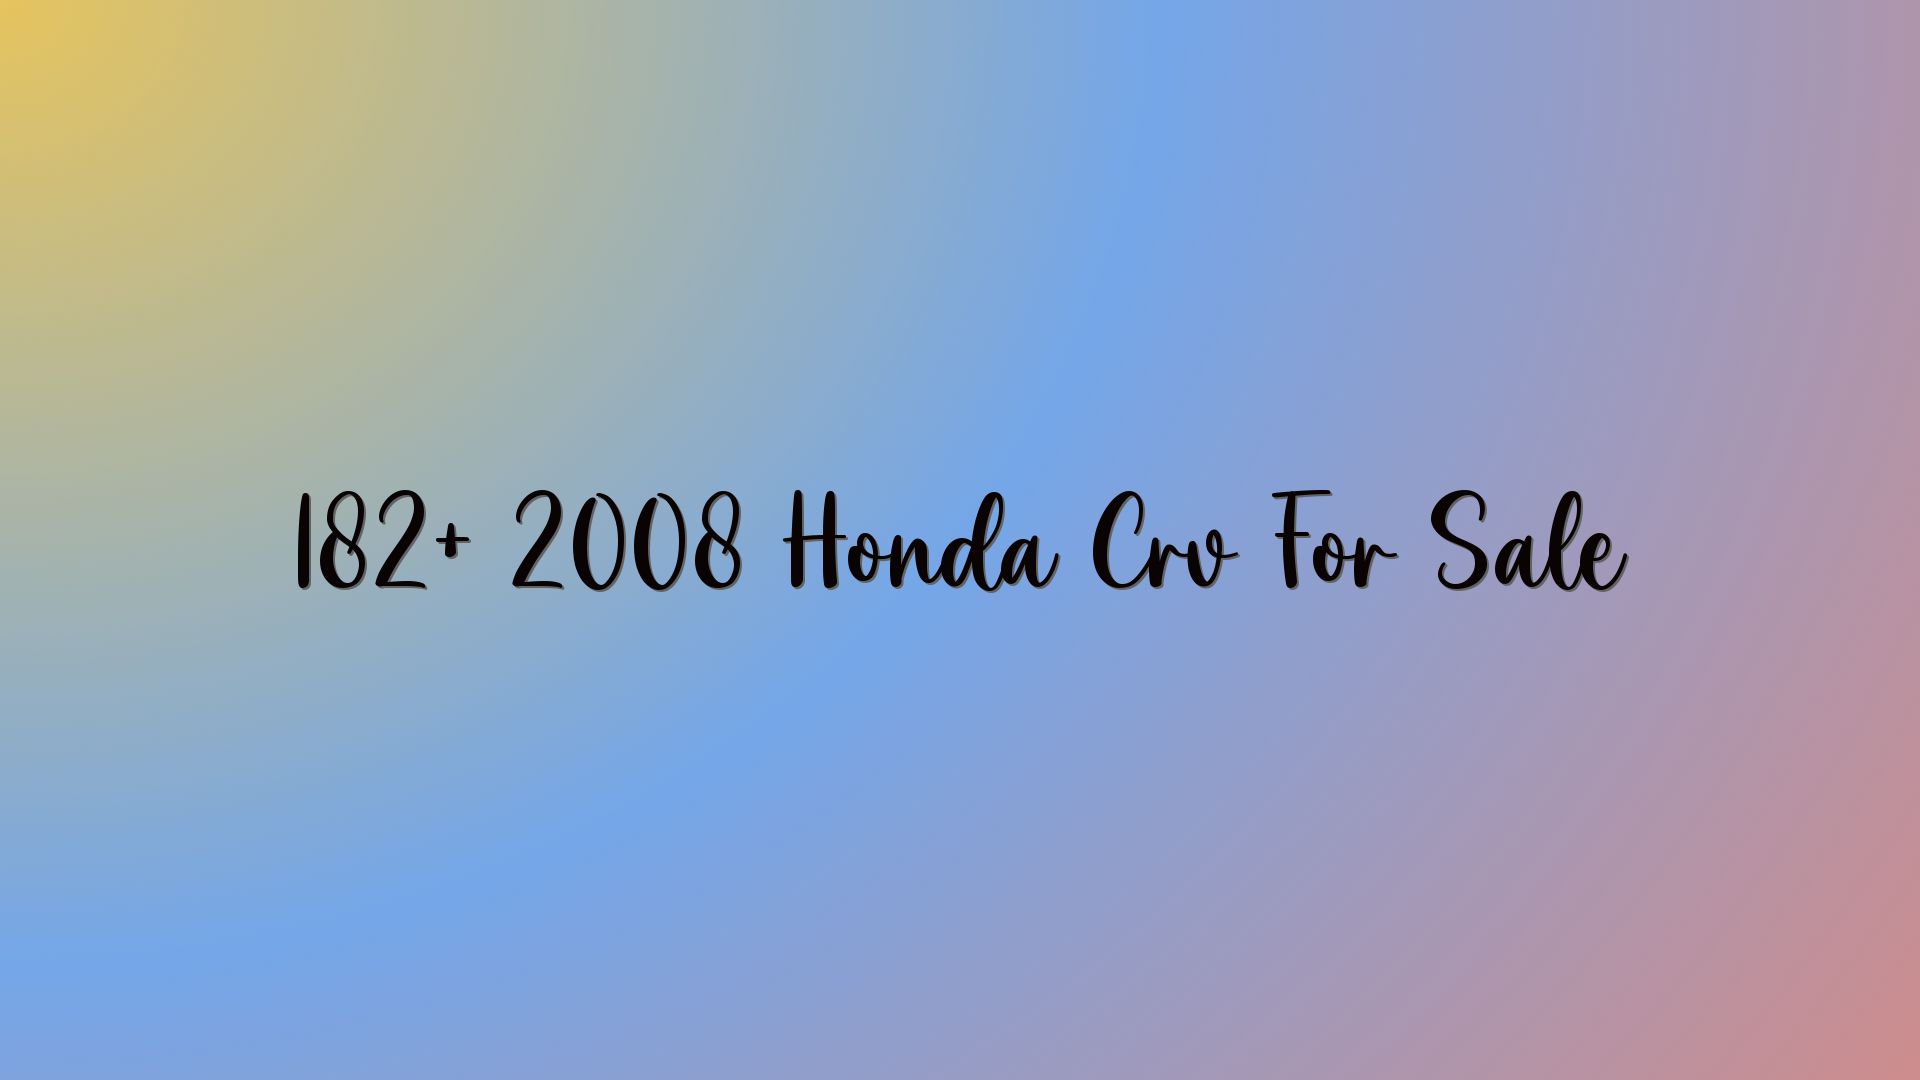 182+ 2008 Honda Crv For Sale